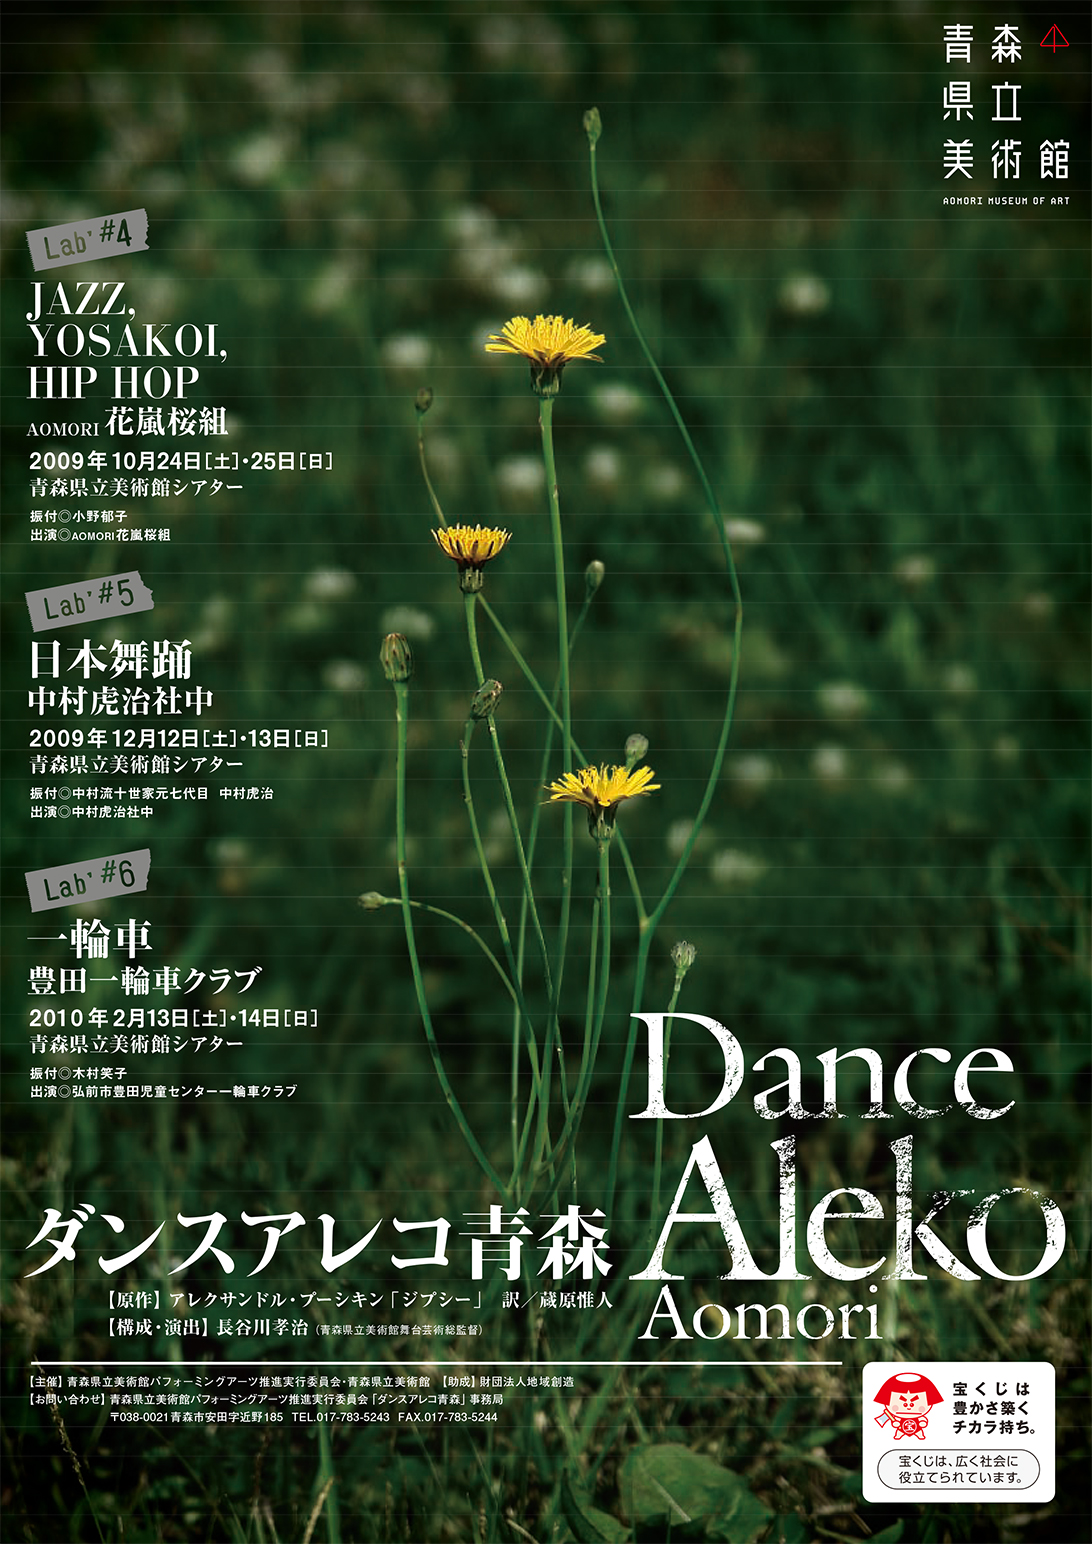 Dance Aleko Aomori Lab’#4 – 6